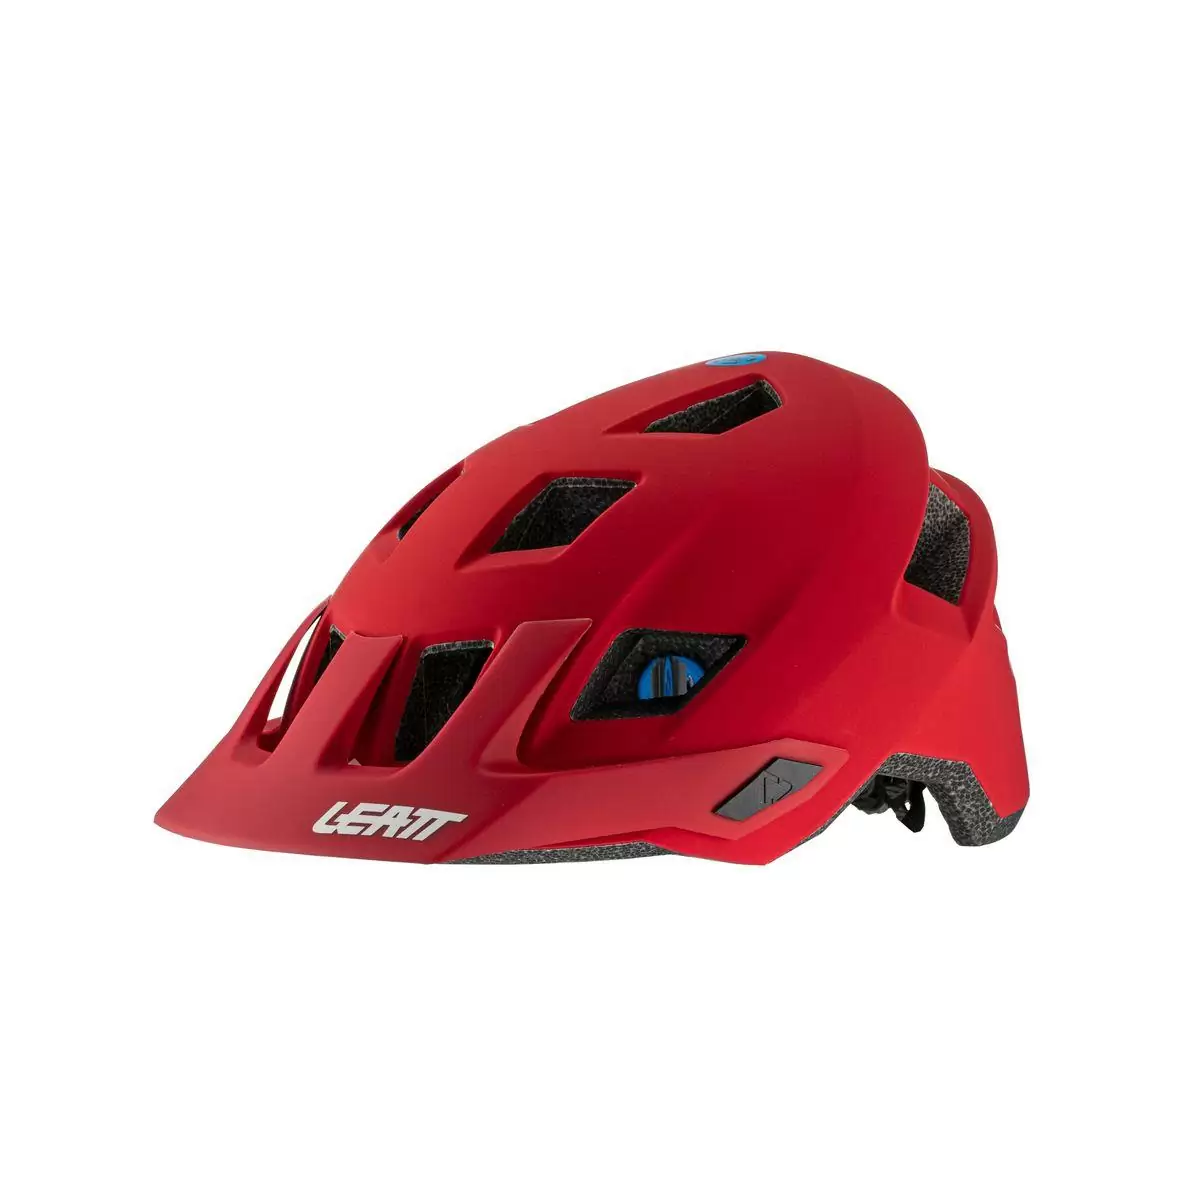 Helmet MTB 1.0 Turbine Technology Red Size L (59-63cm) - image